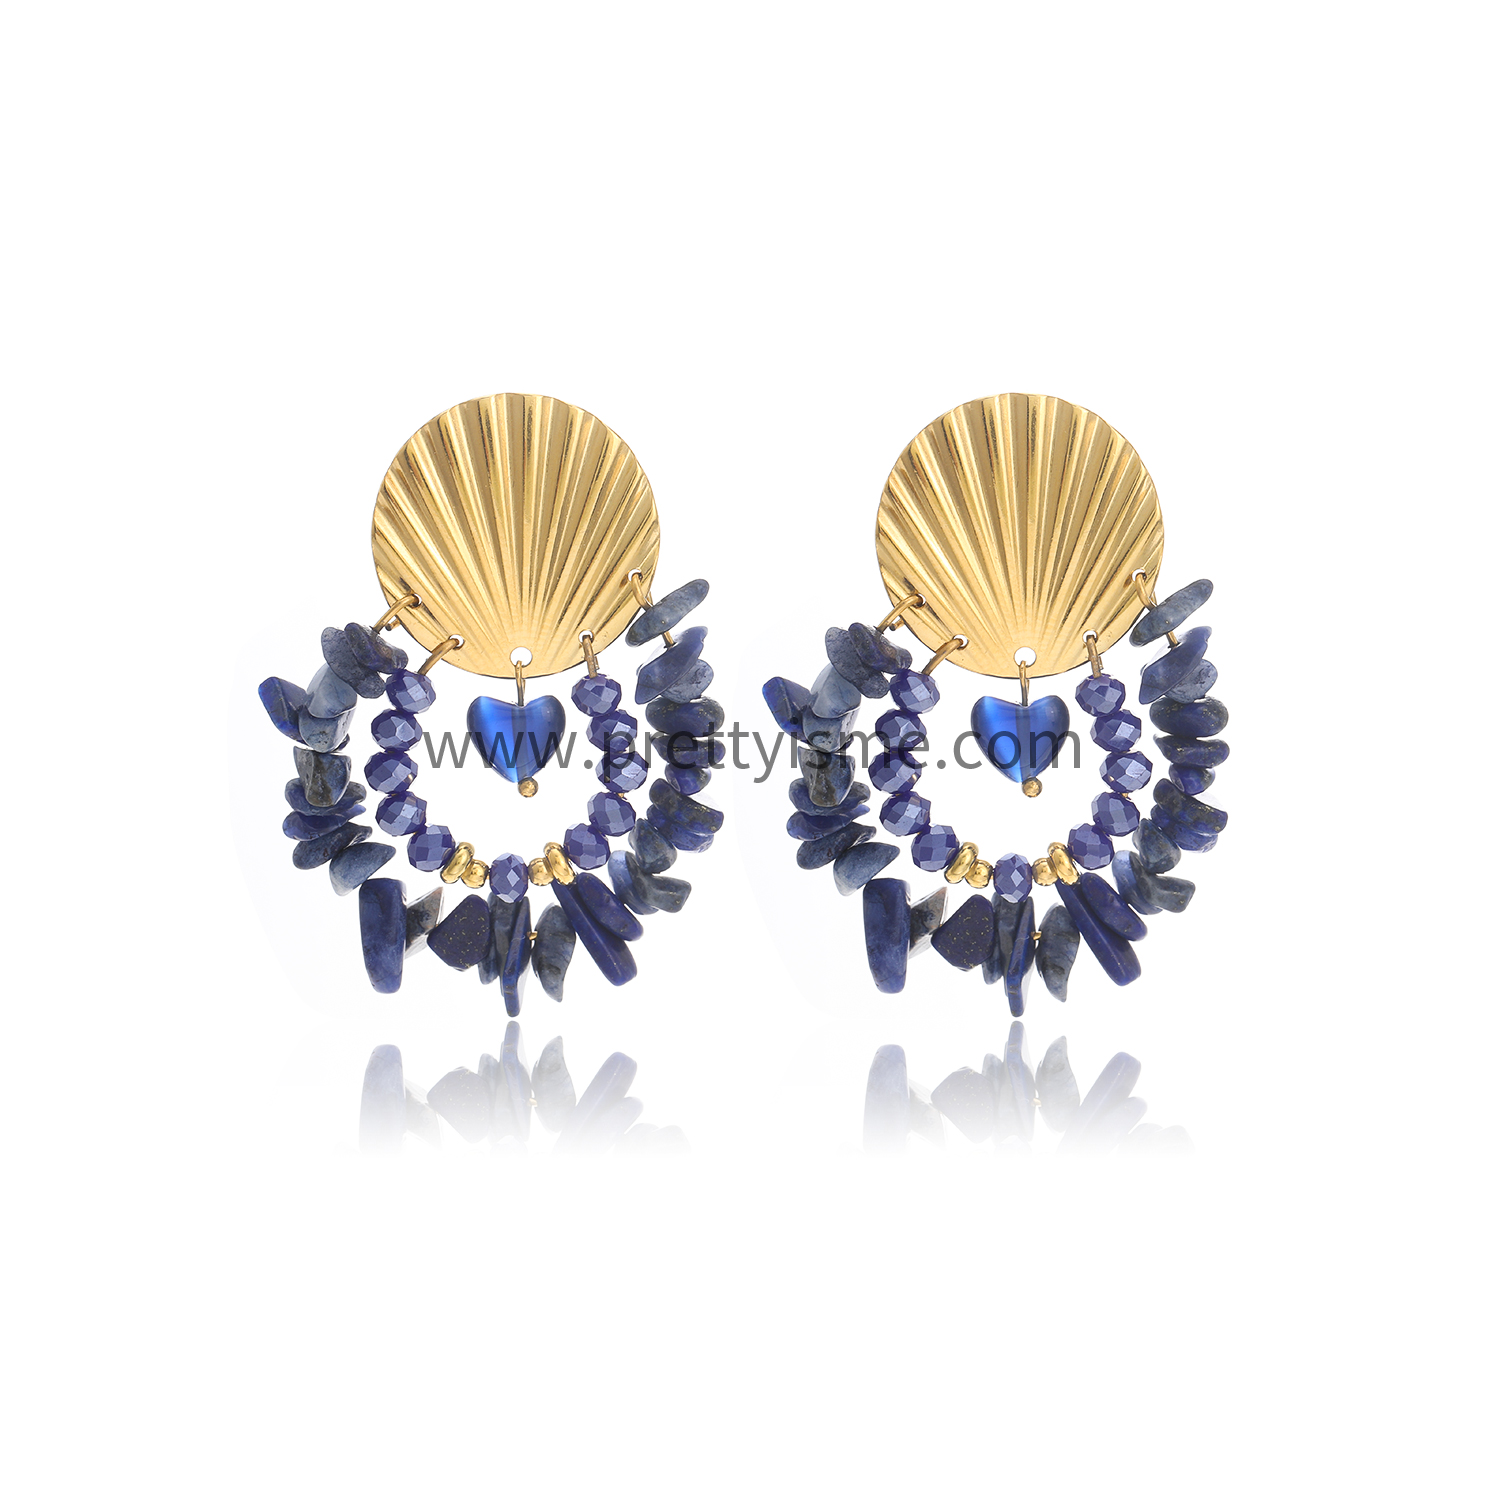 Designer Stainless Steel Earrings Gold Plated 18K with Lapis Lazuli Earrings (5).webp